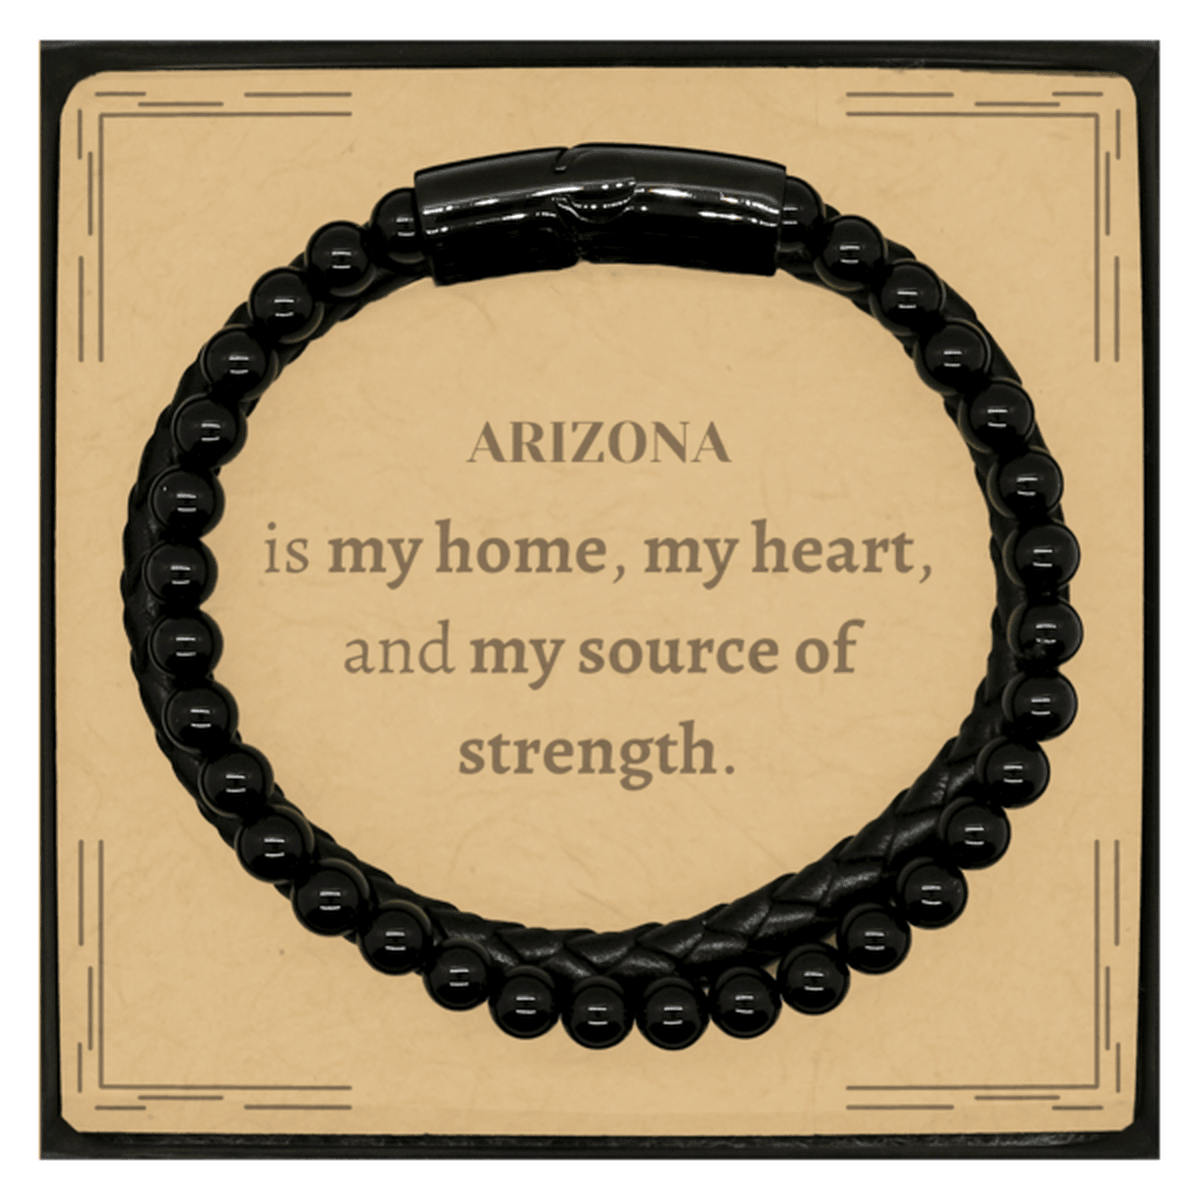 Arizona is my home Gifts, Lovely Arizona Birthday Christmas Stone Leather Bracelets For People from Arizona, Men, Women, Friends - Mallard Moon Gift Shop